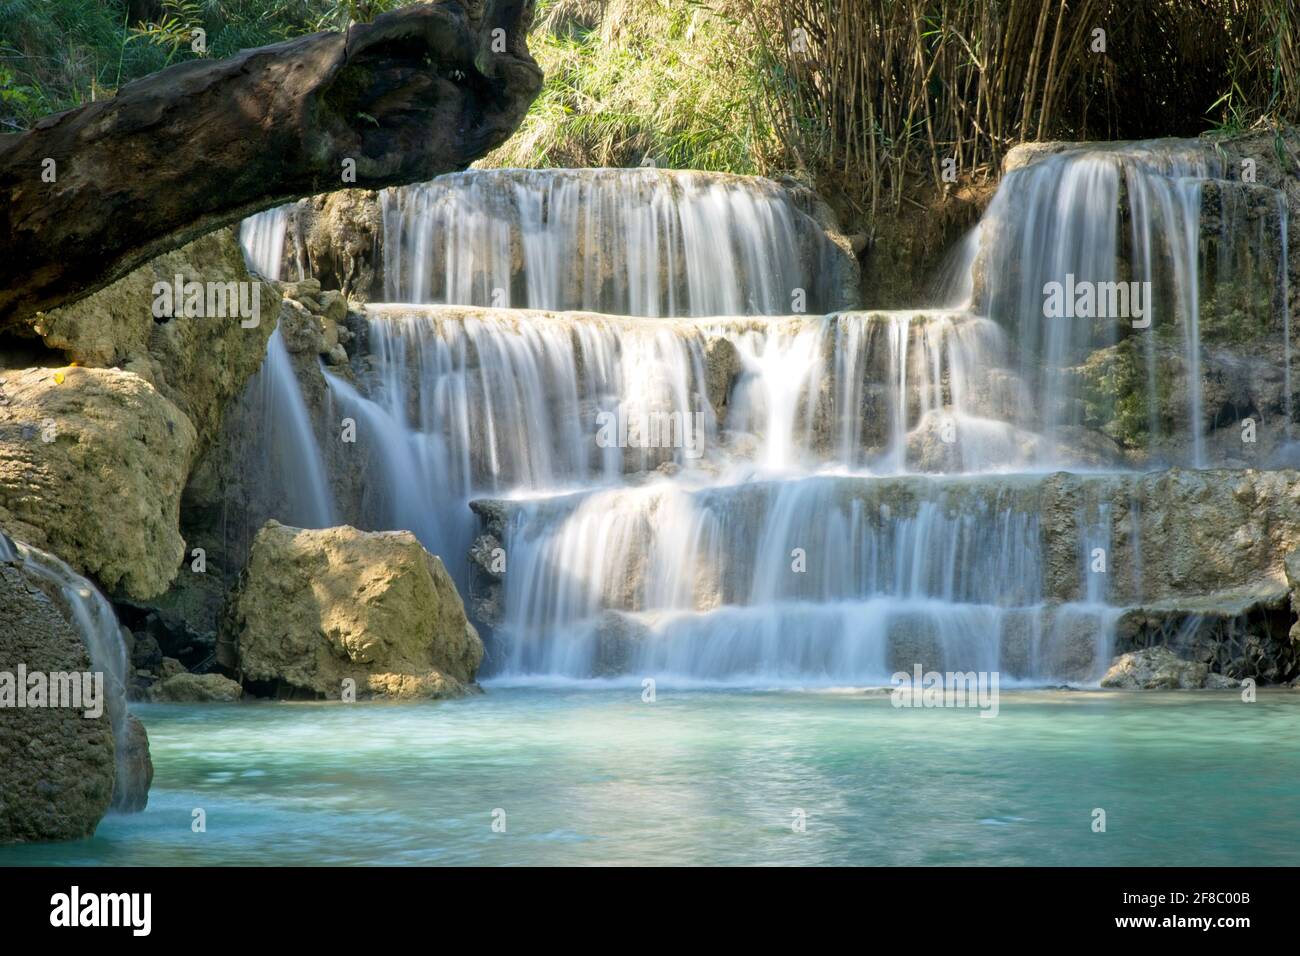 Beautiful slow motion blur of running water at Tat Kuang Si Waterfall, Luang Prabang, Laos. Stock Photo